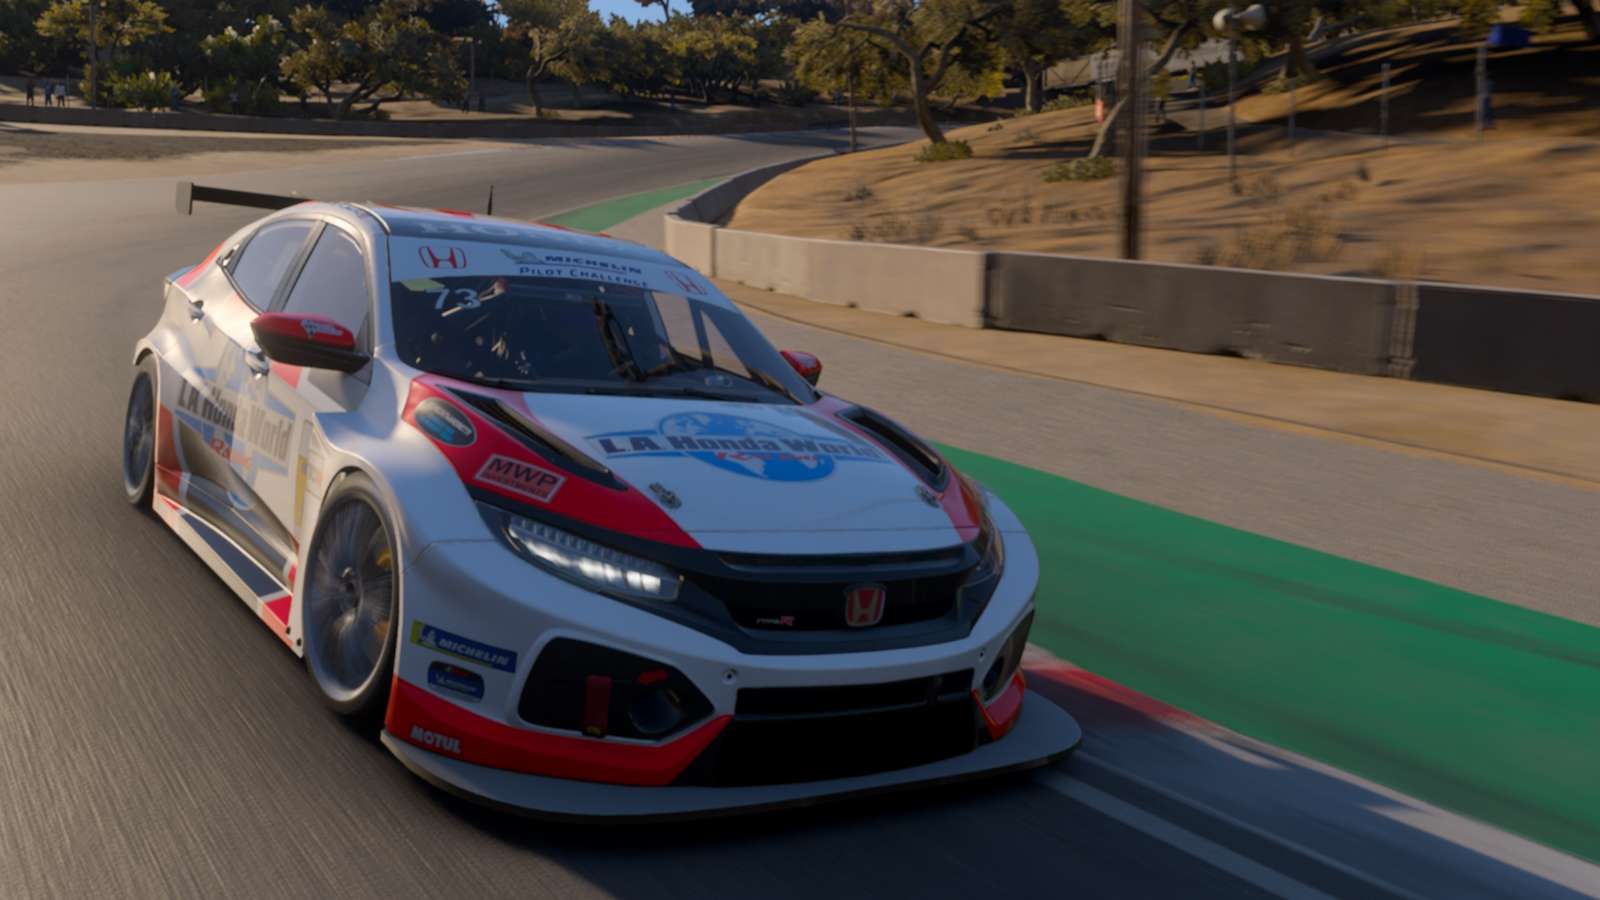 Honda Civic racing car on Laguna Seca in Forza Motorsport's Featured Multiplayer Qualifier Series.